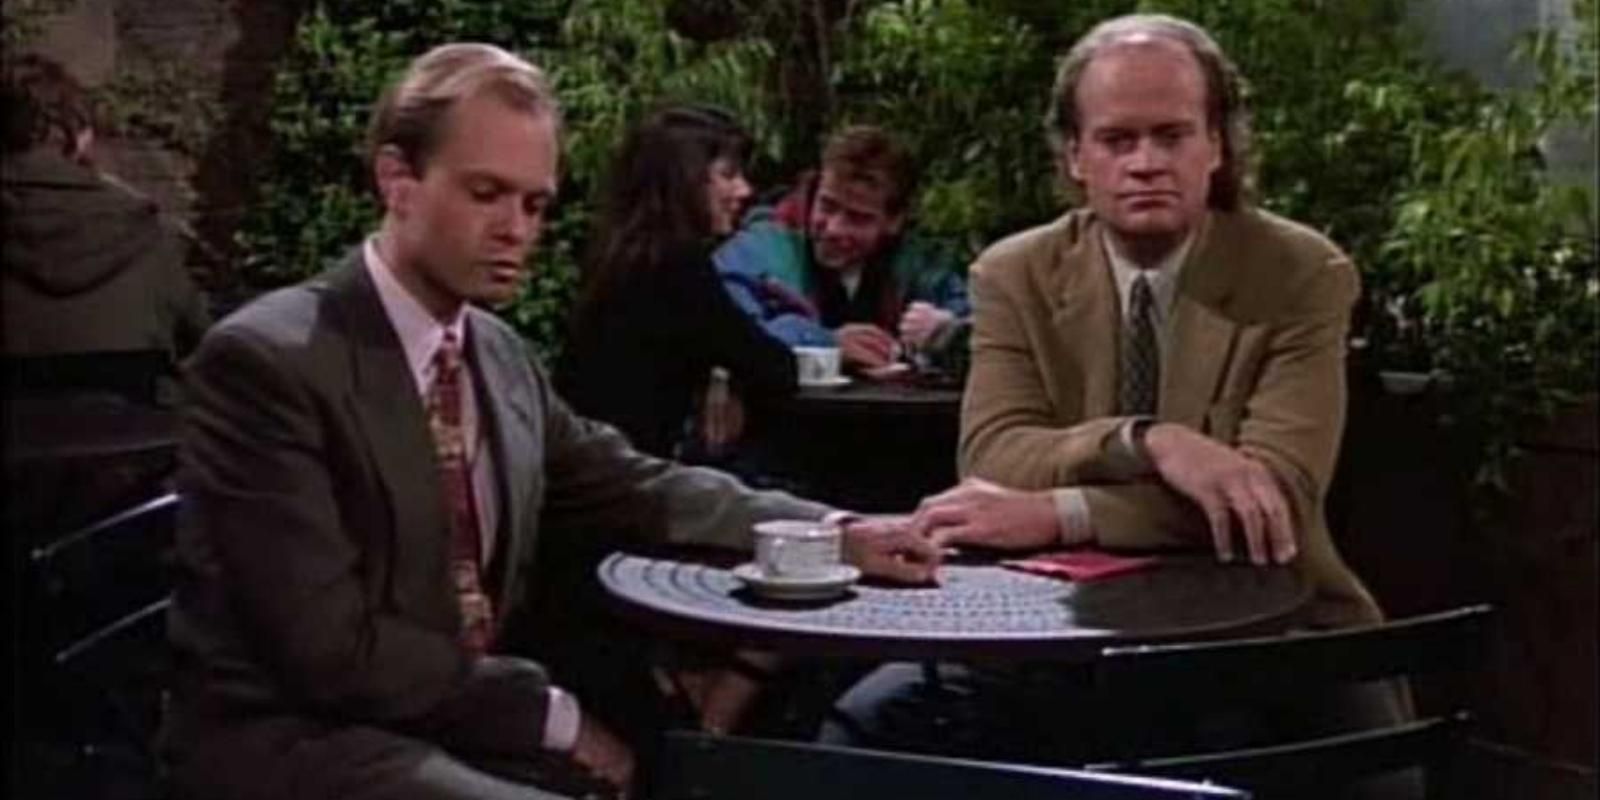 Frasier and Niles Crane drink coffee outside of Cafe Nervosa in Frasier